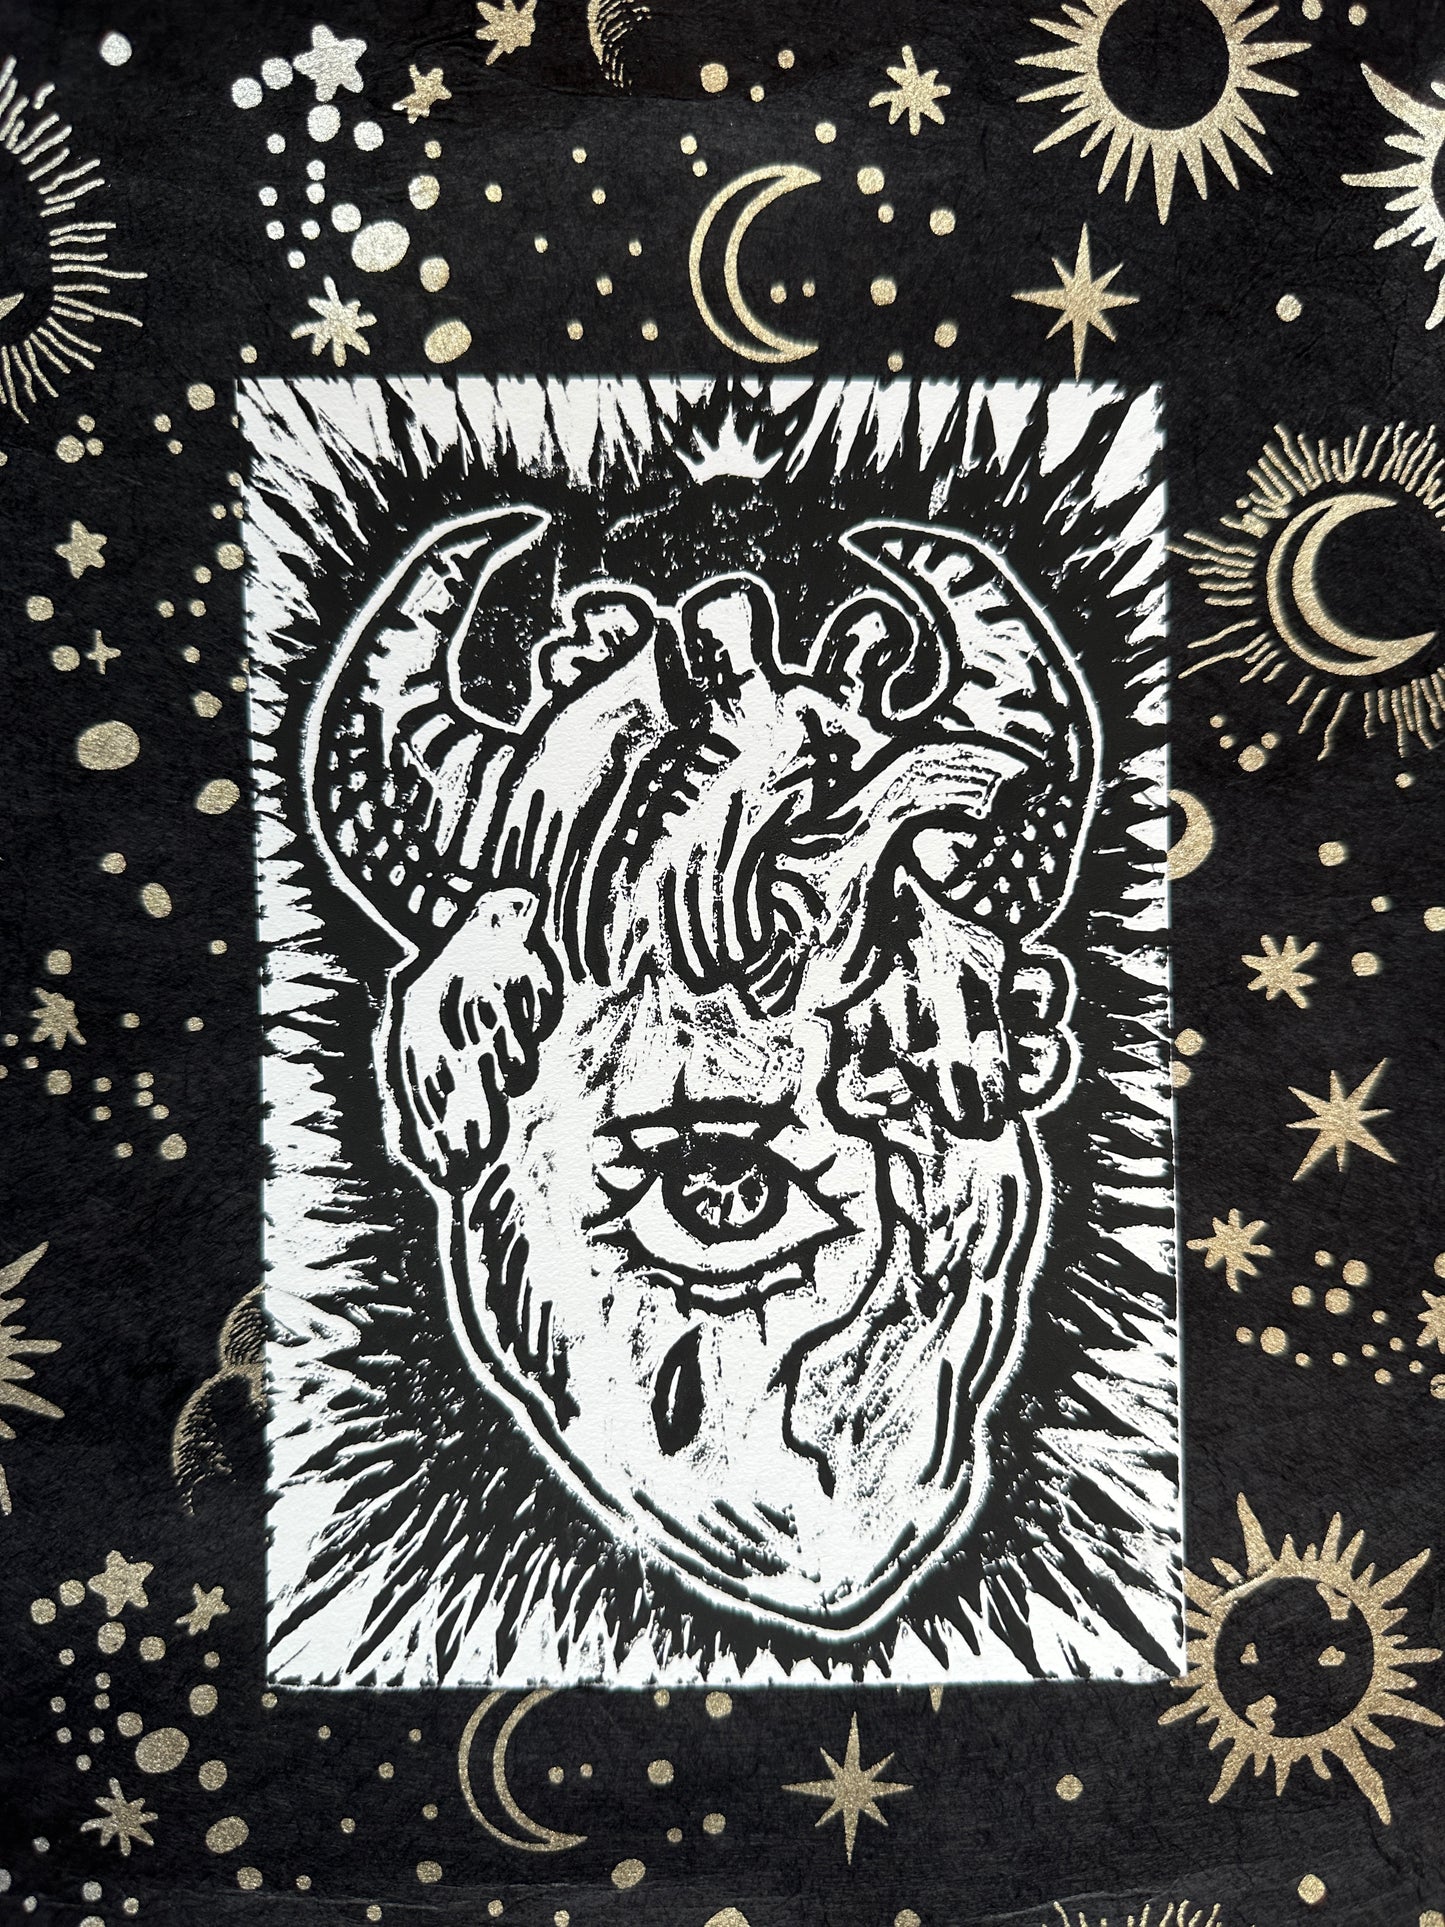 "Heart of a Monster" Tier 2 Black Oil-based ink